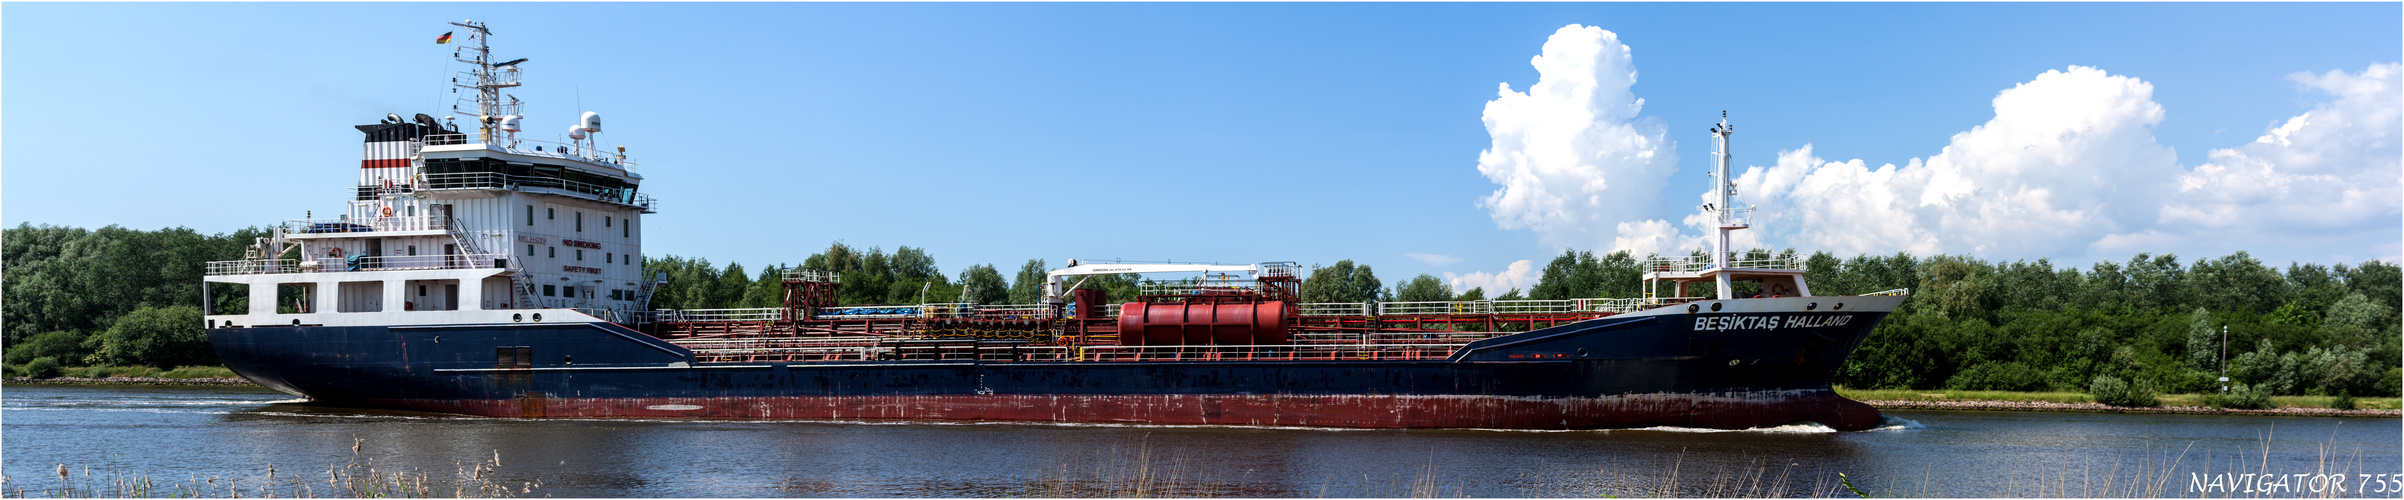 BESITKAS HALLAND / Oil/Chemical Tanker / NOK / Germany